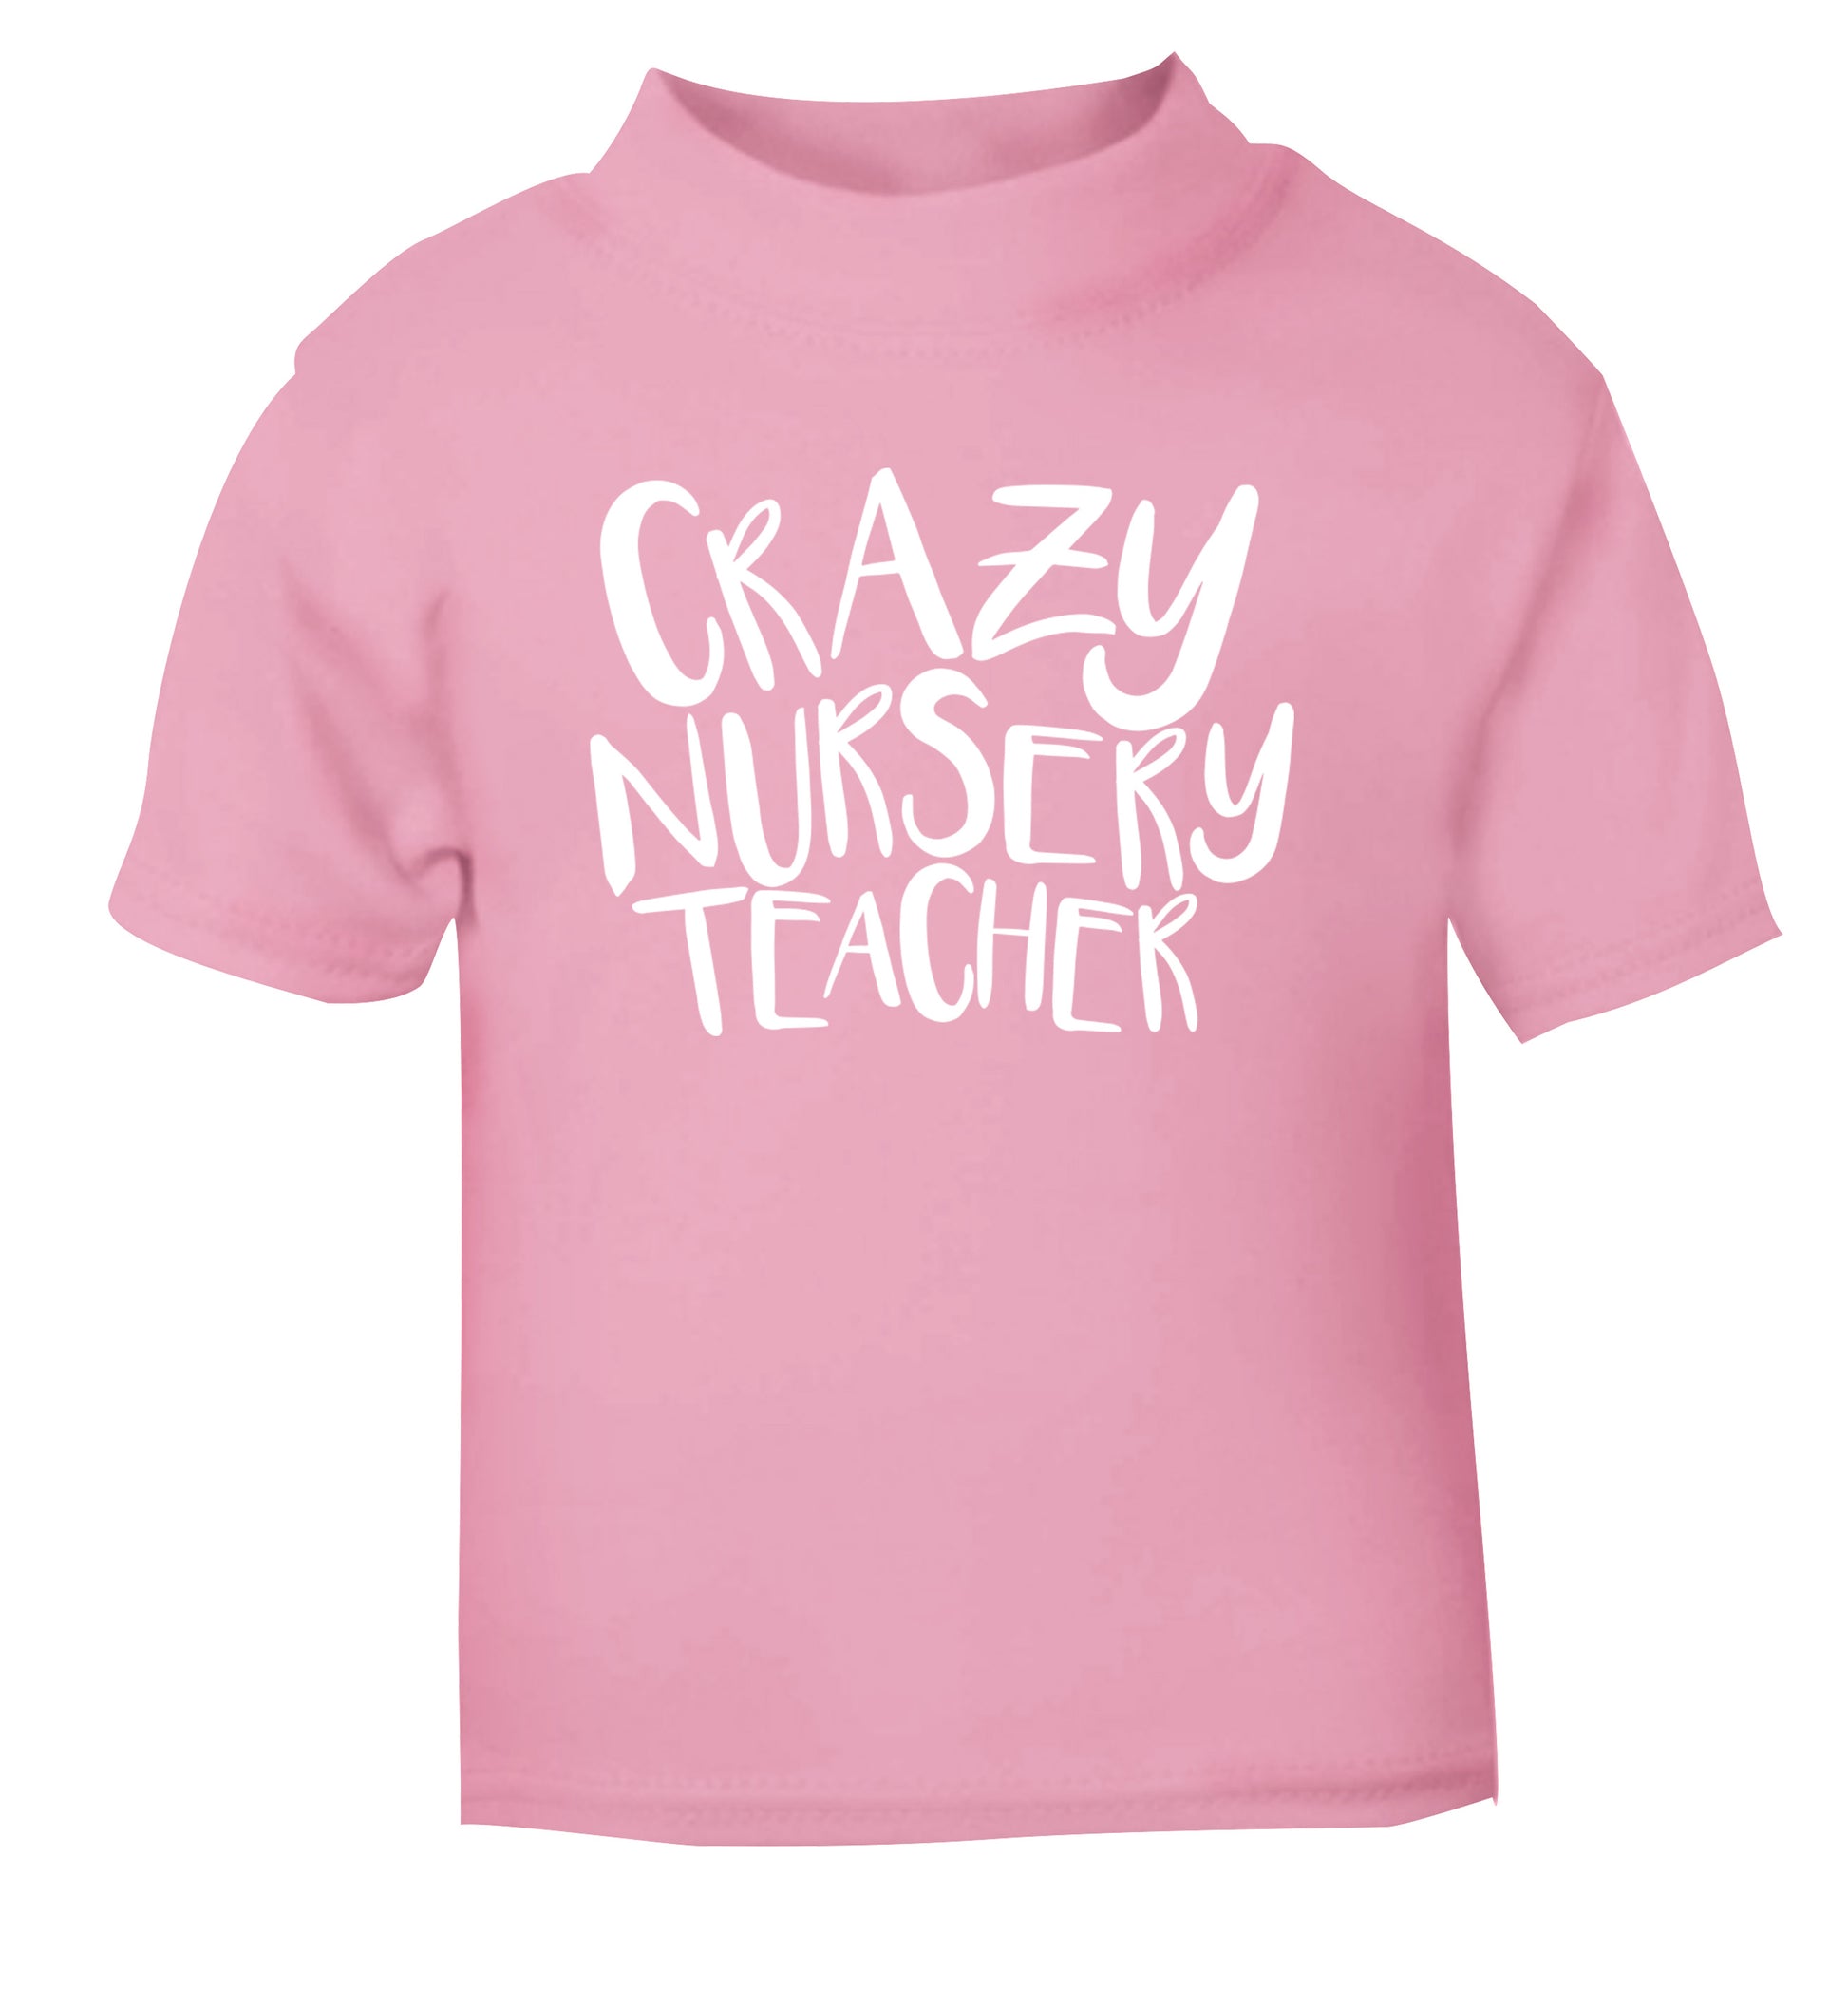 Crazy nursery teacher light pink Baby Toddler Tshirt 2 Years